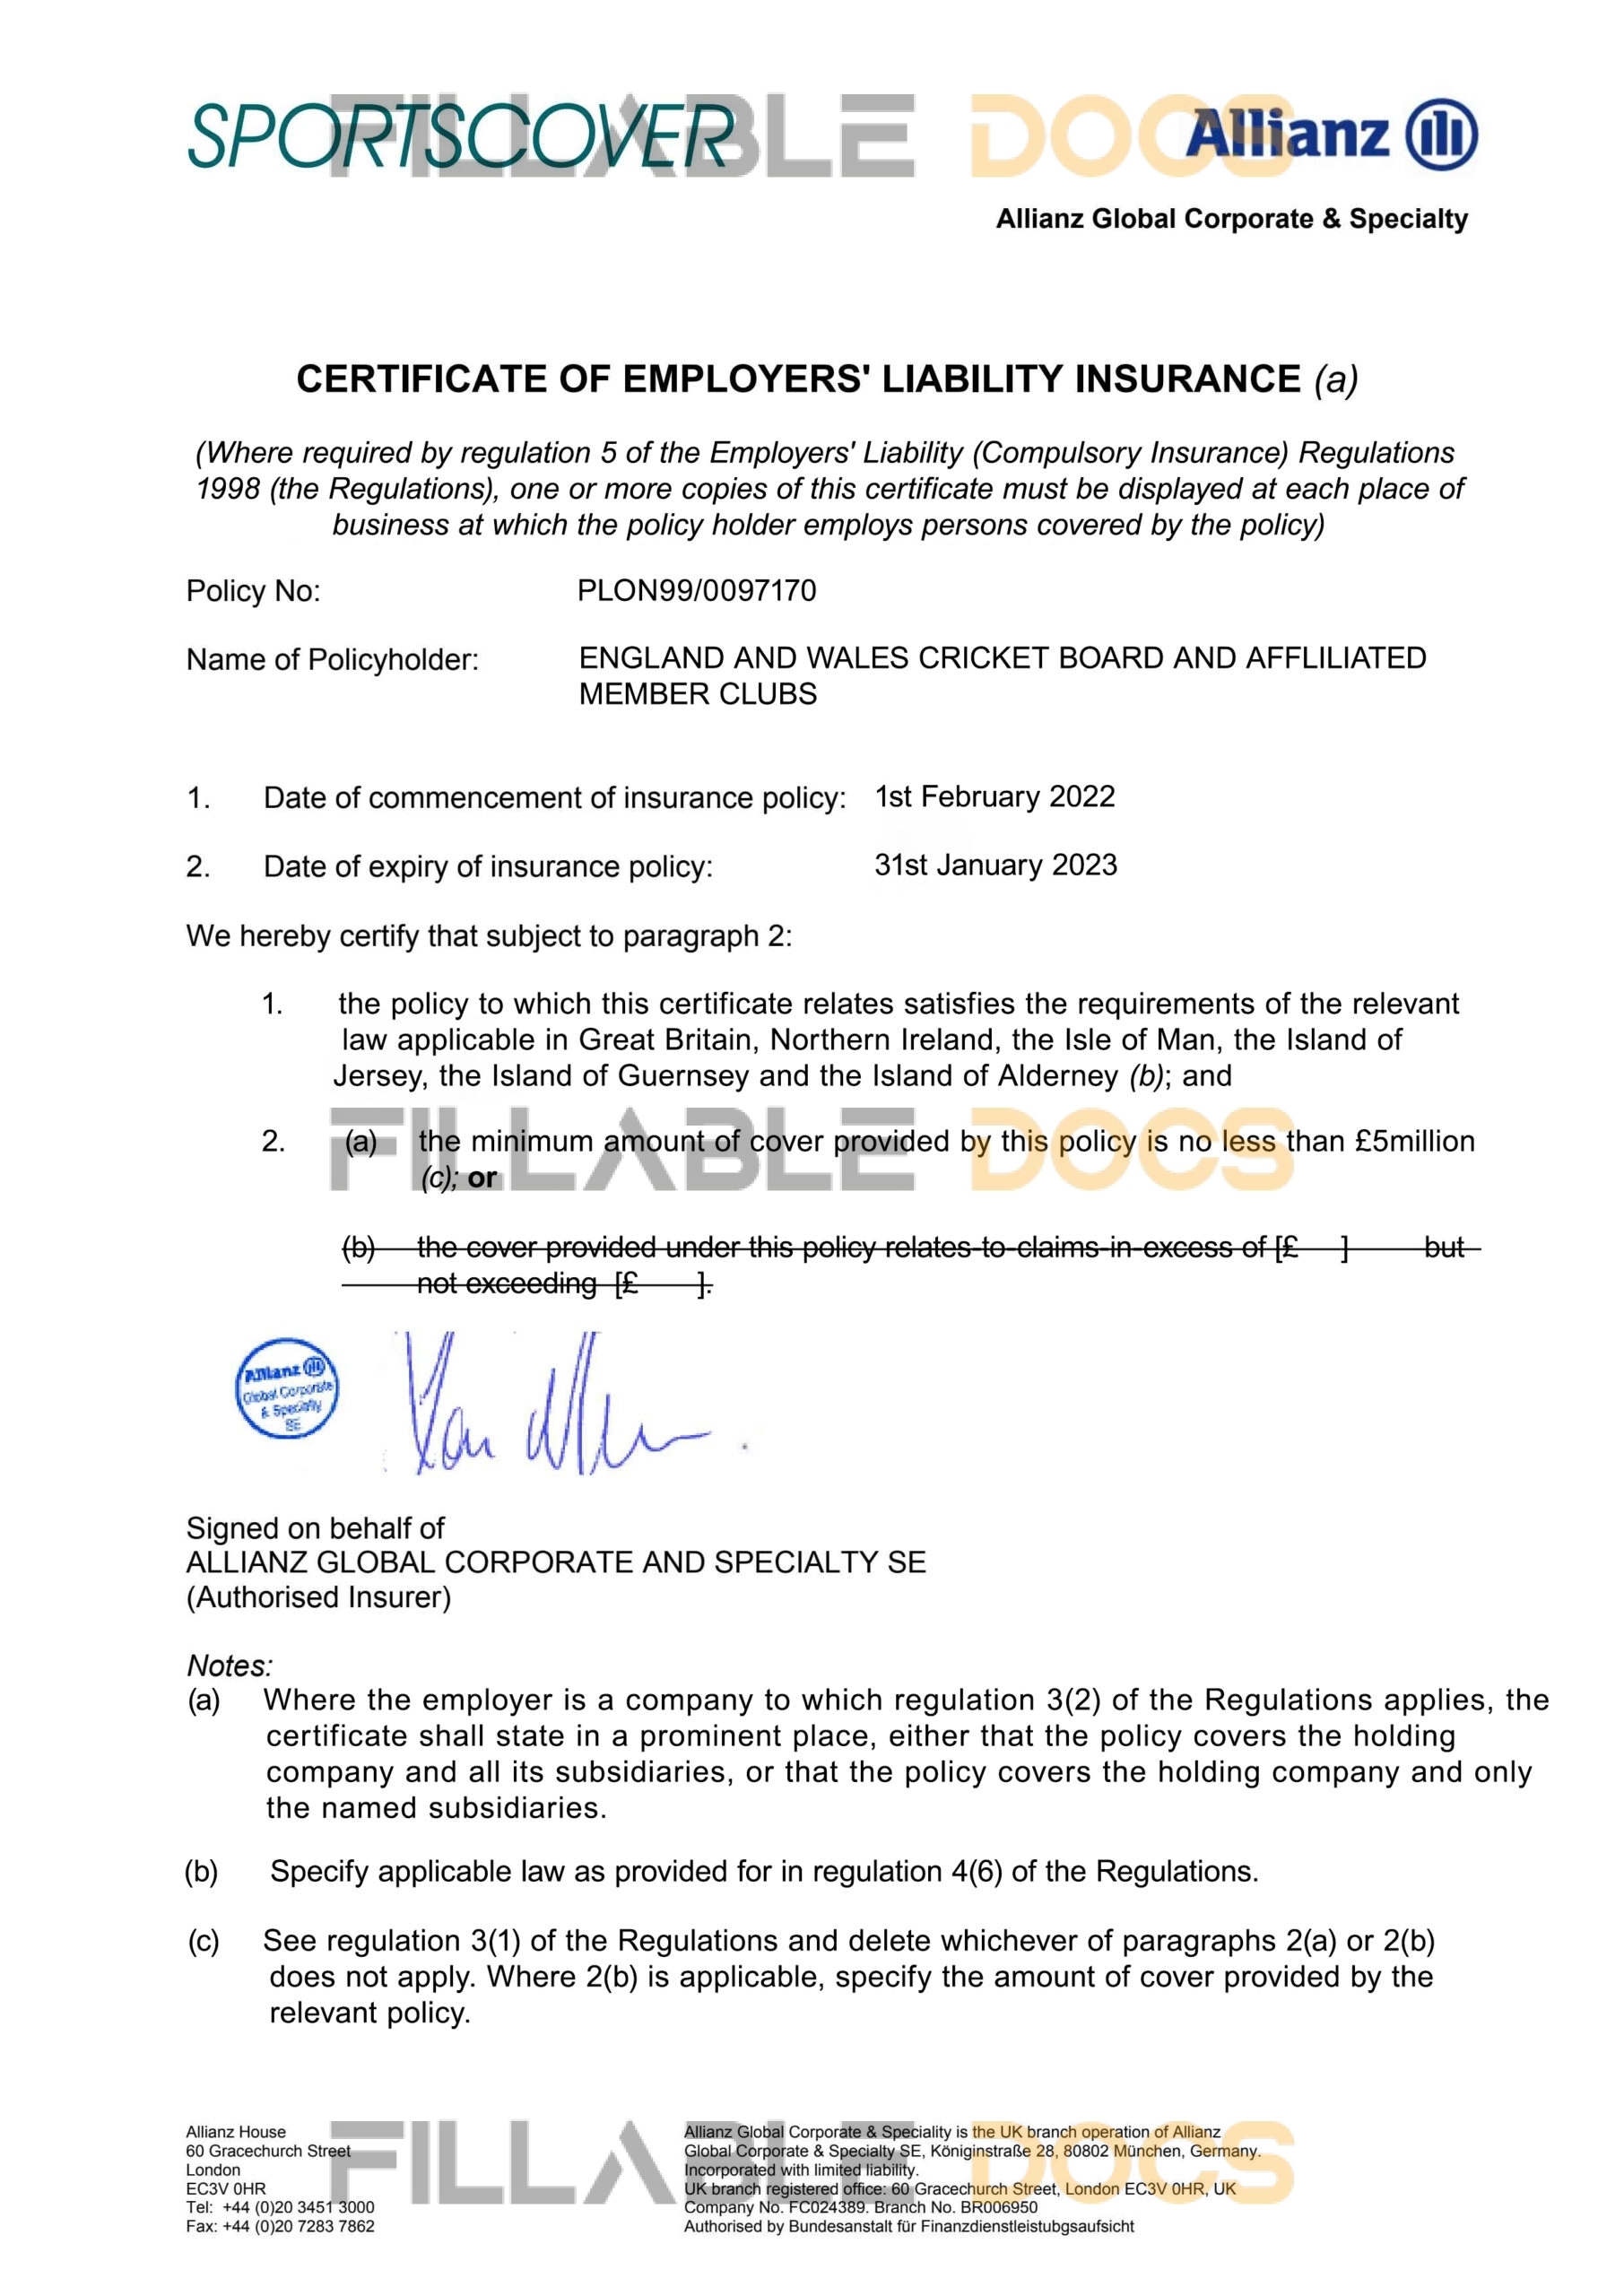 Customizable Fake Proof of Allianz employer liability Insurance